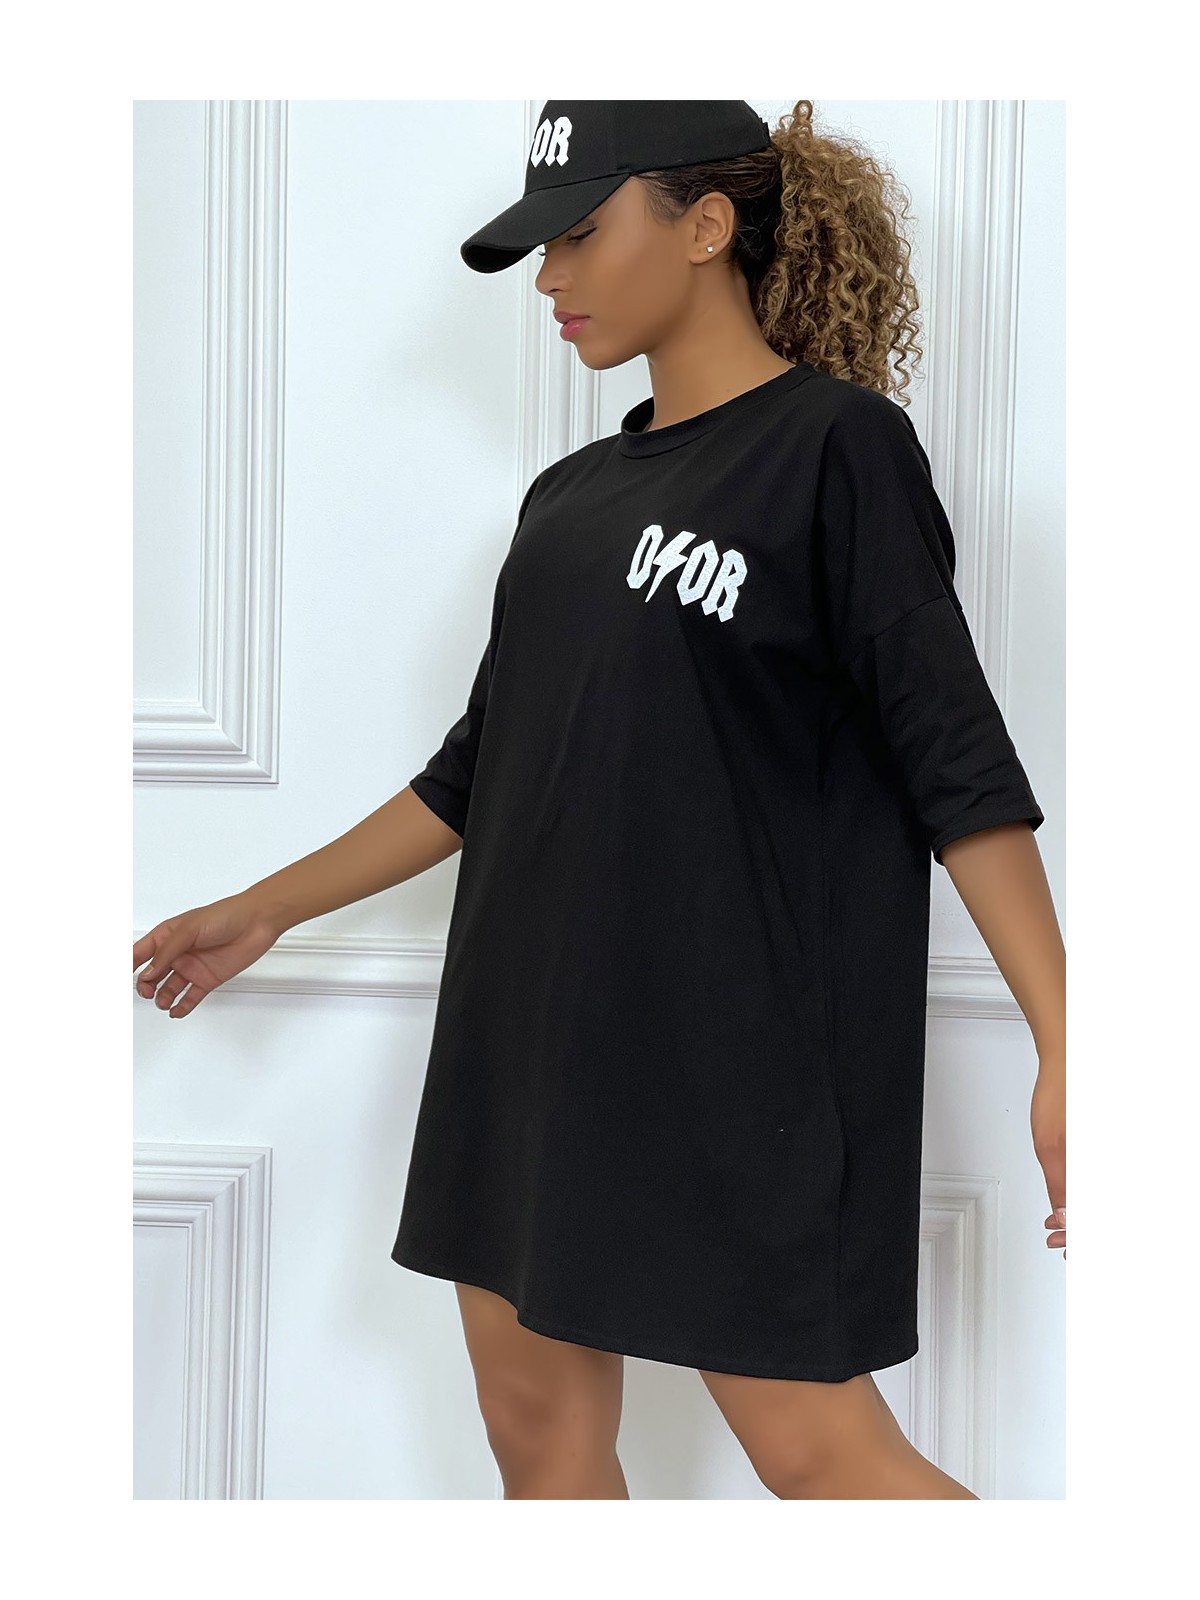 Tee-shirt oversize noir tendance, écriture "D/or", manche mi-longue - 6